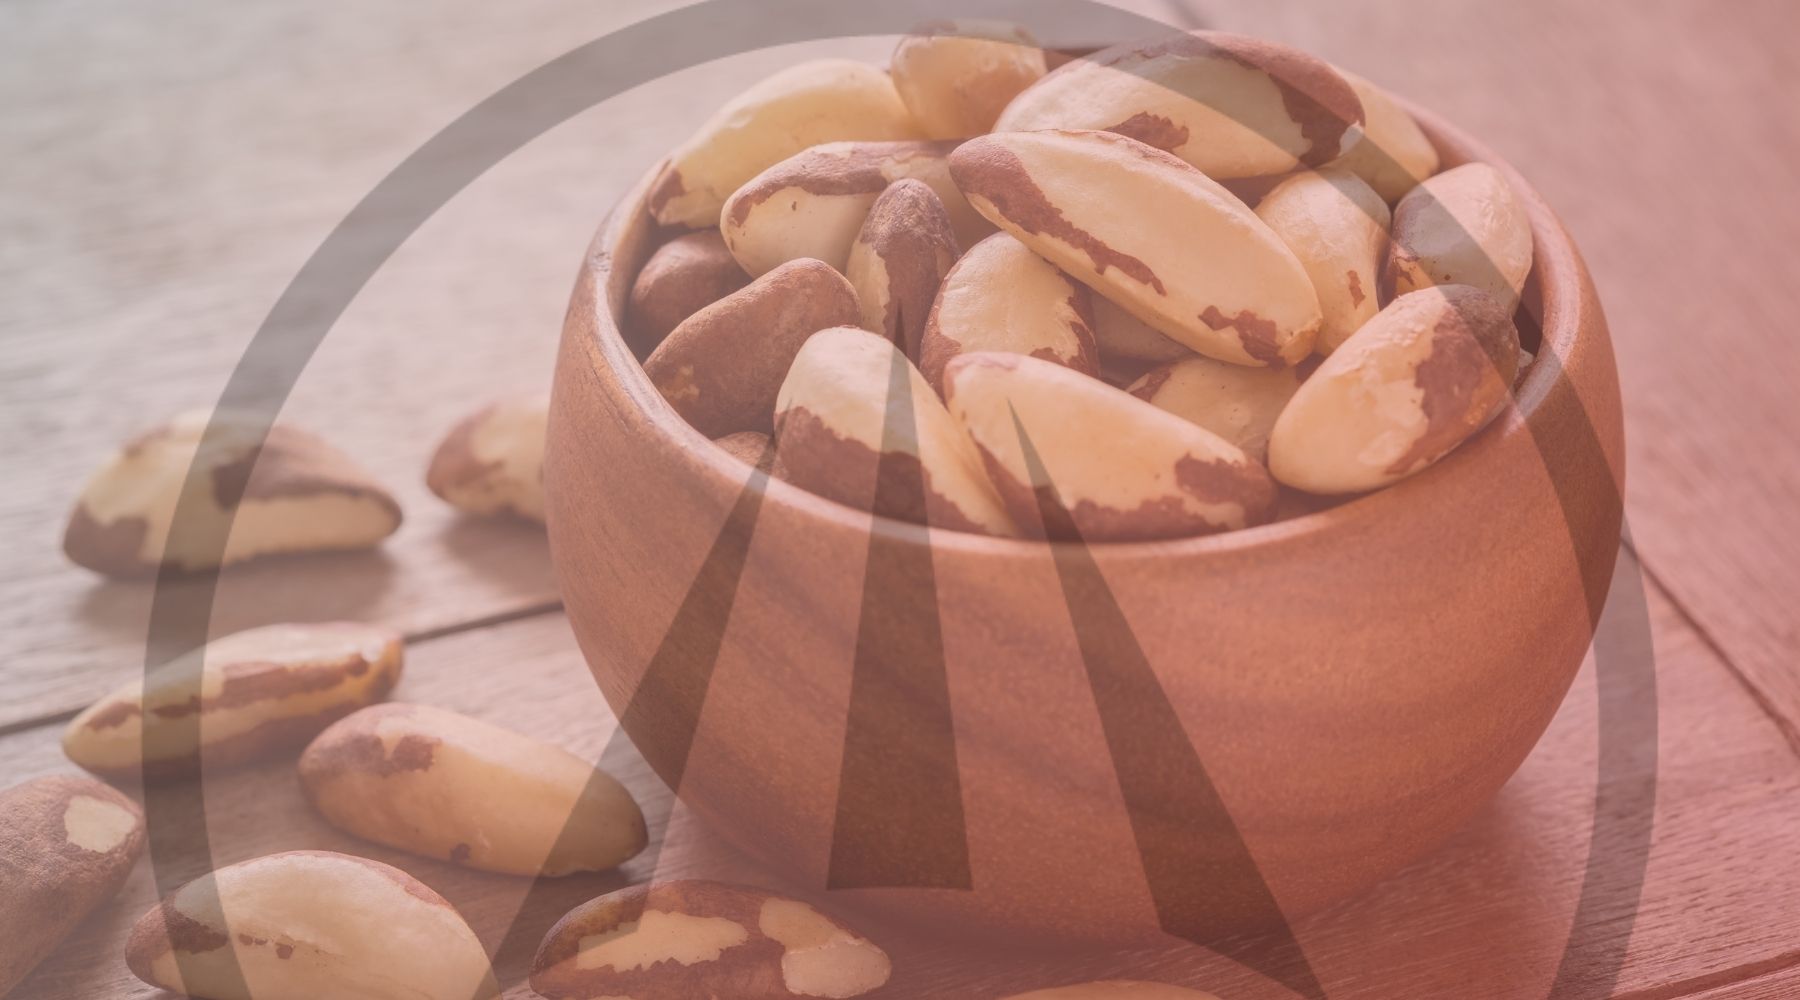 Brazil nuts contain selenium